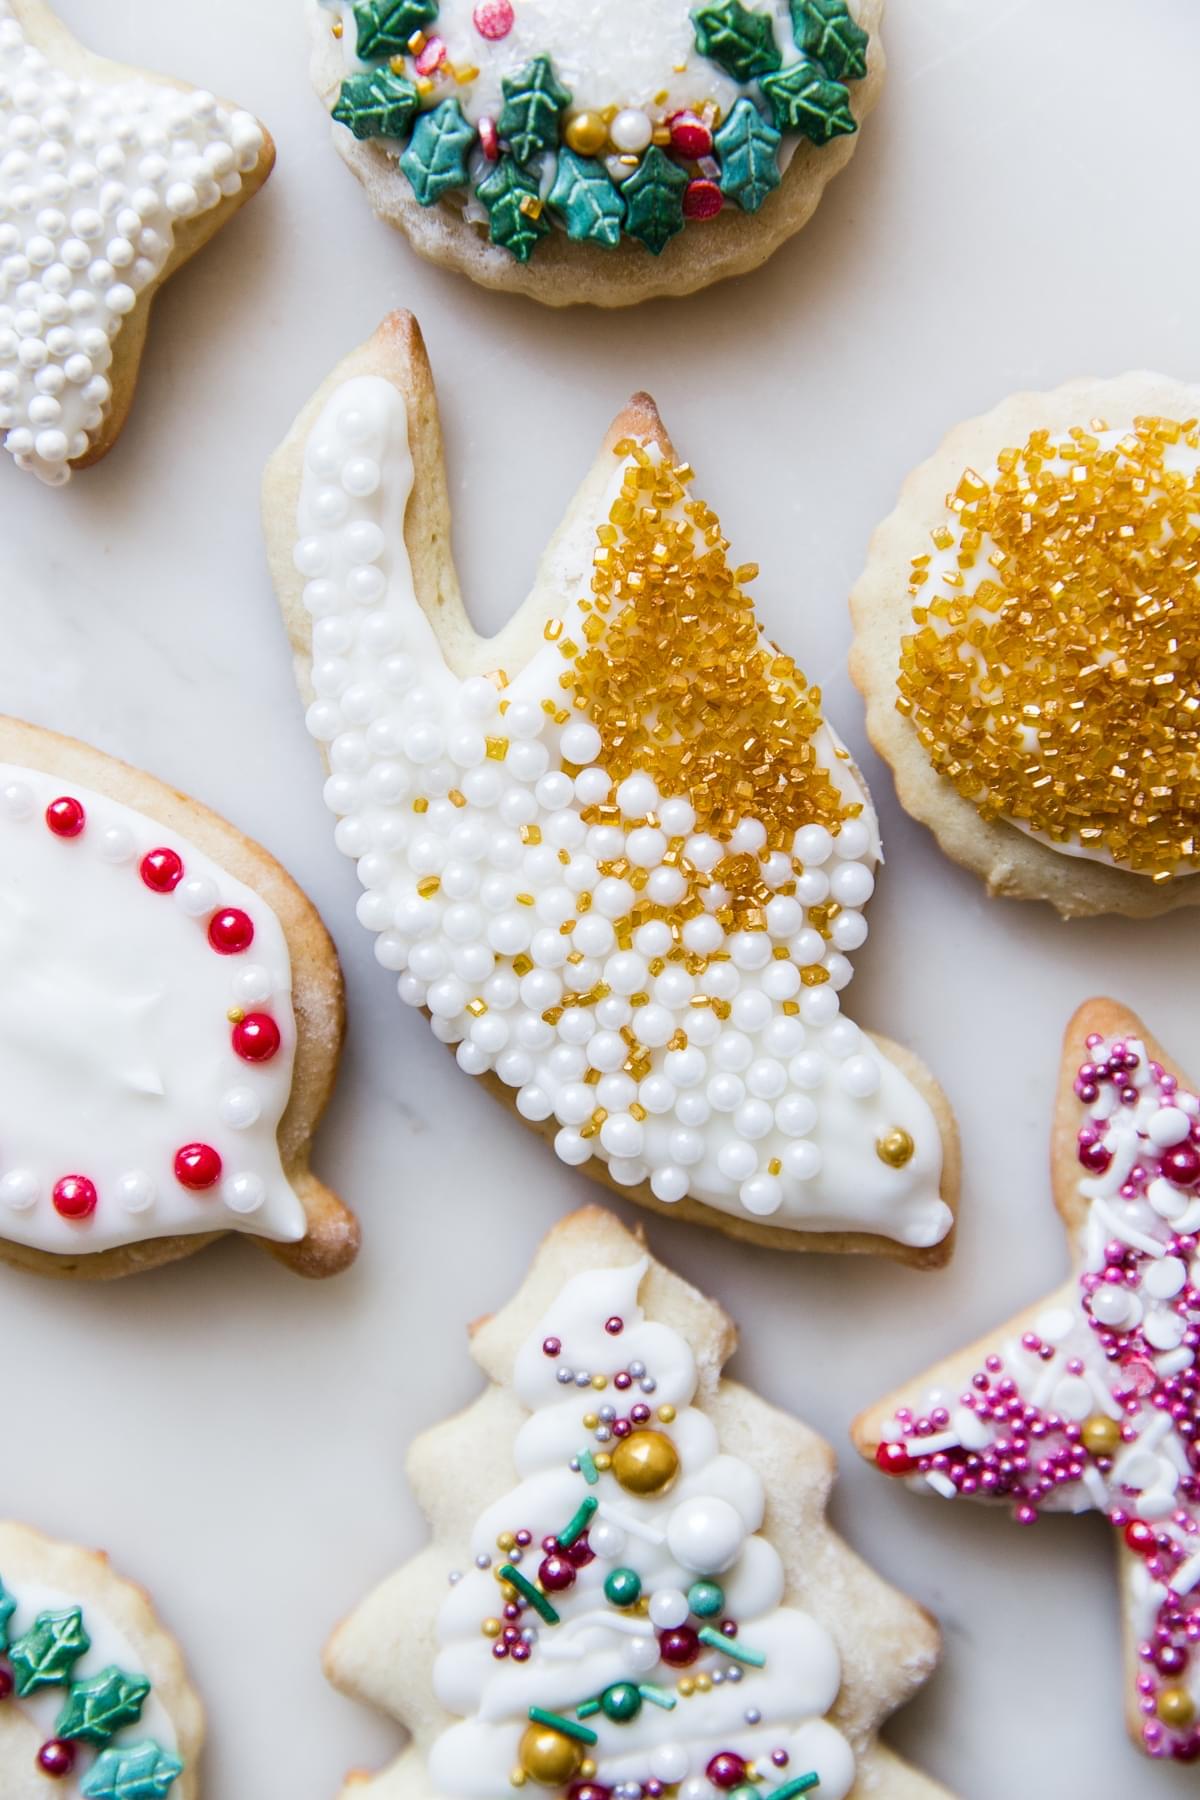 Sour Cream Sugar Cookies with Christmas sprinkles.